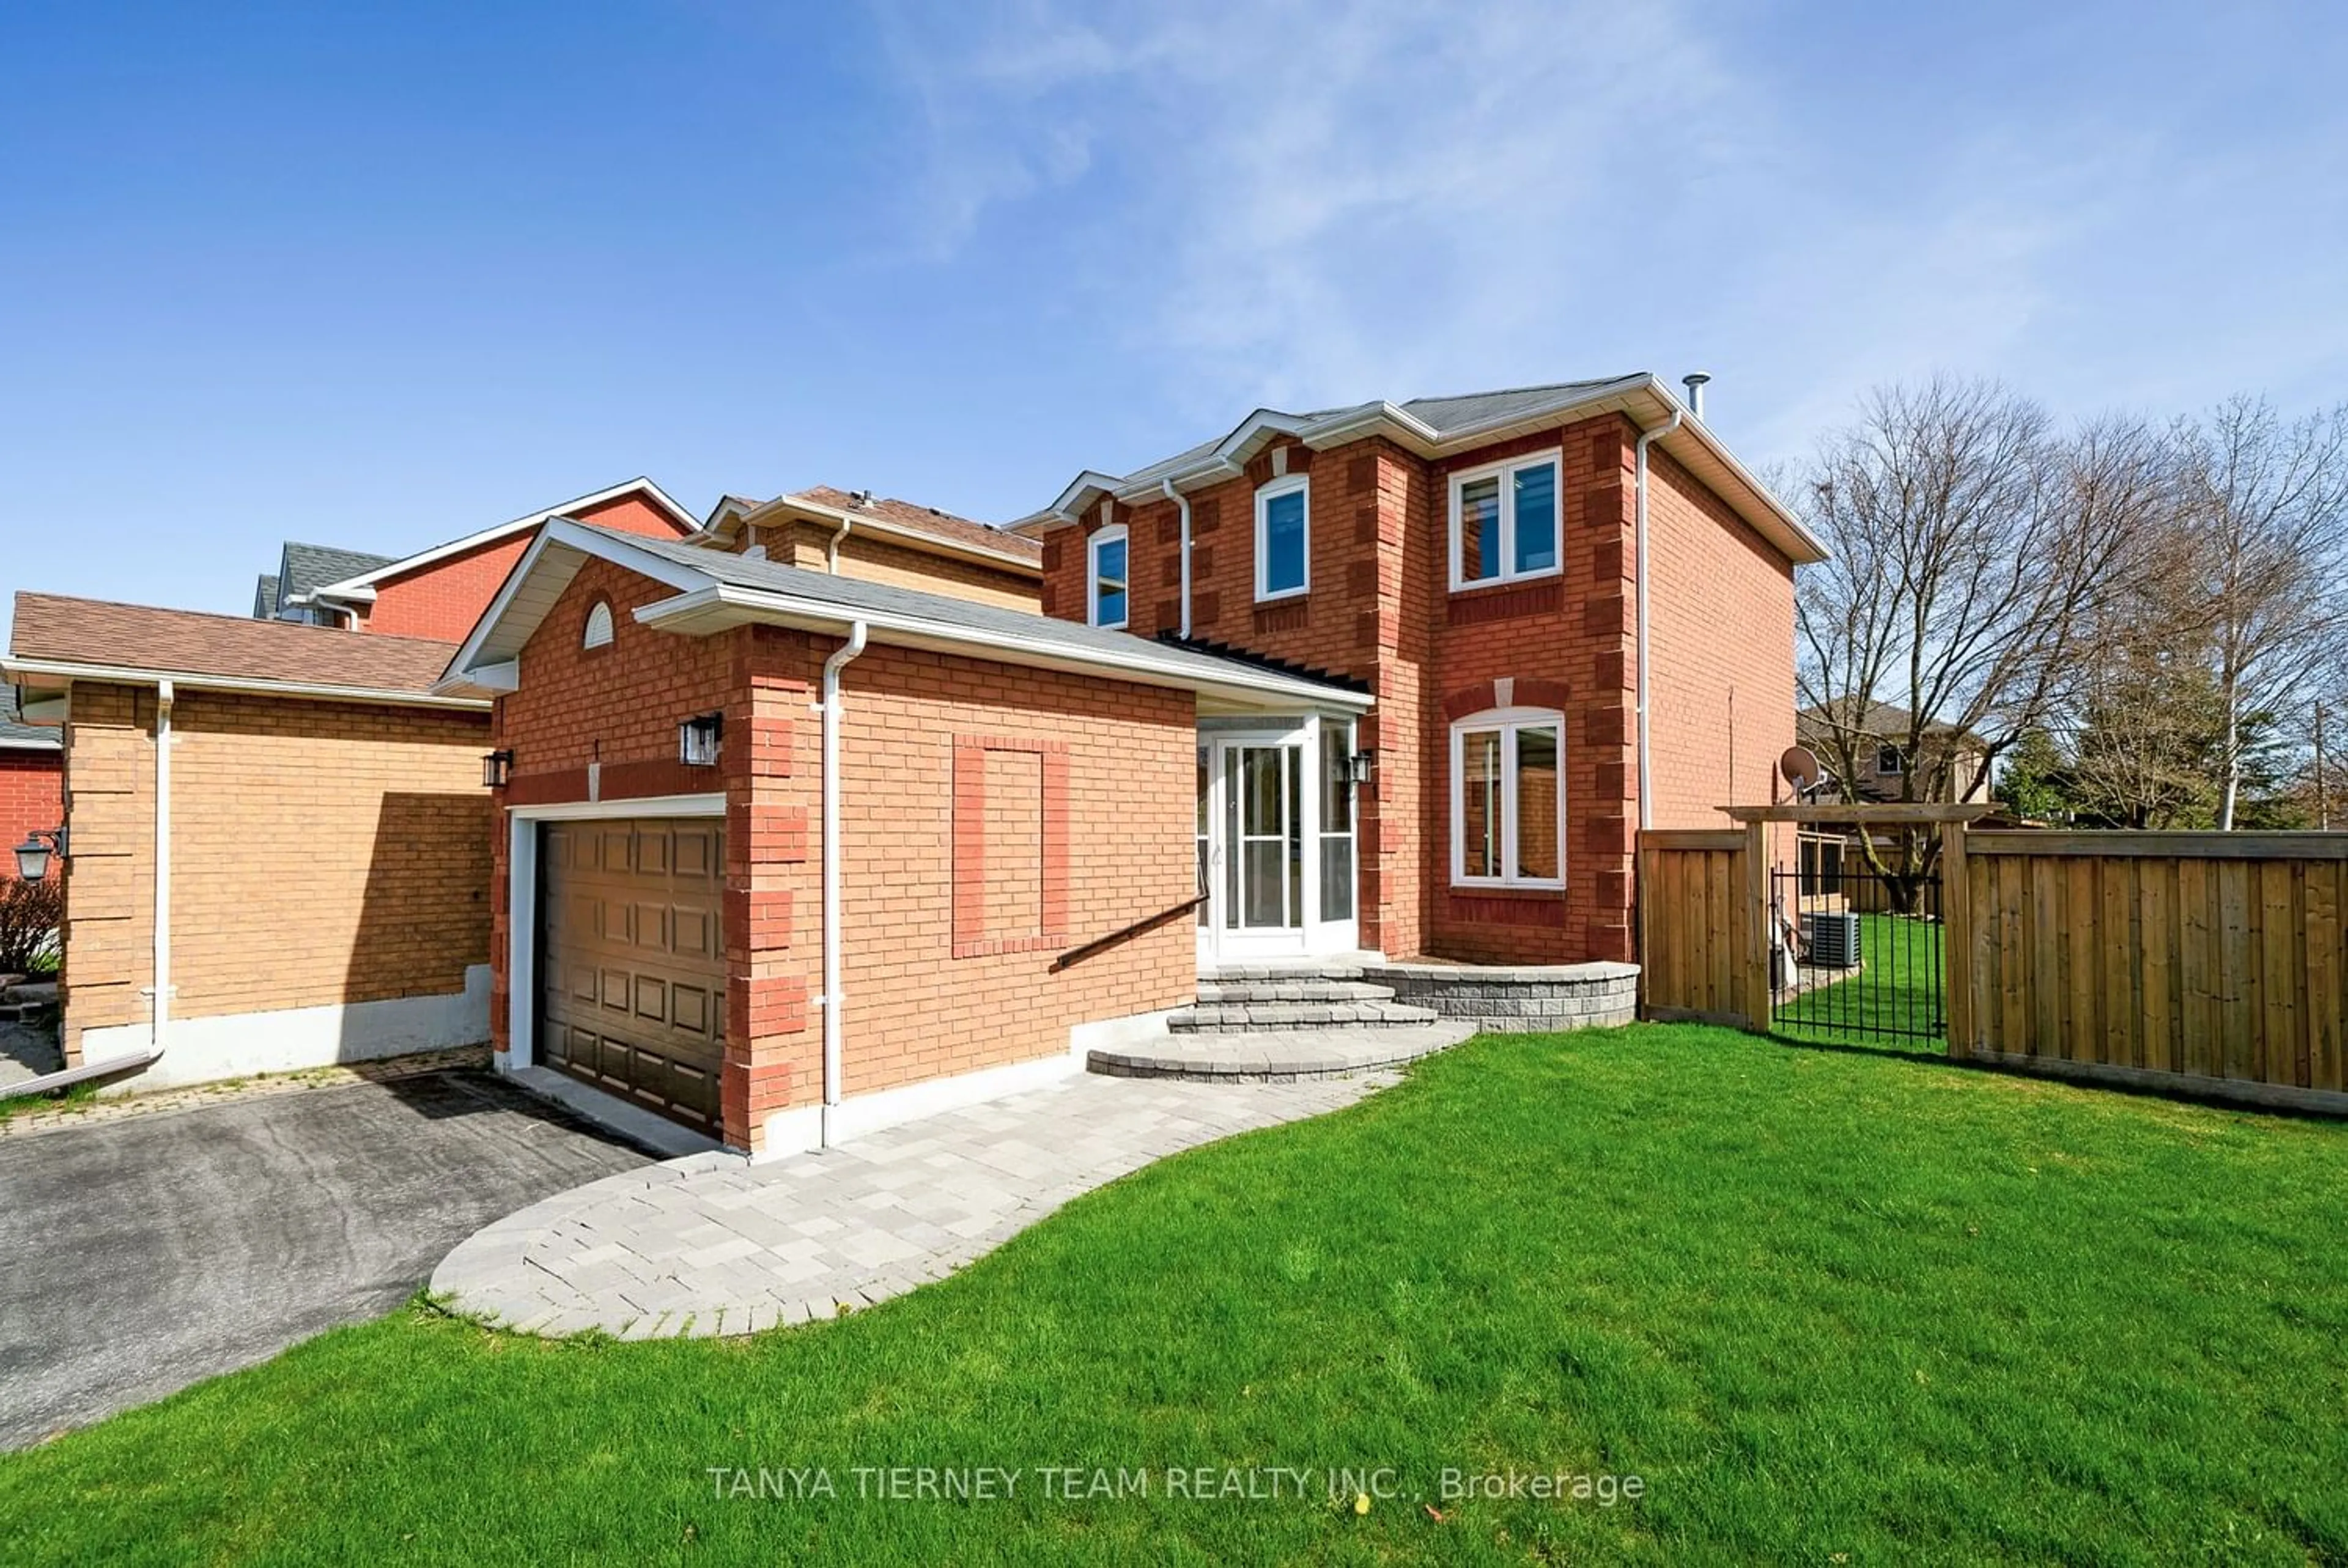 Home with brick exterior material for 1 Ireland St, Clarington Ontario L1C 4T9